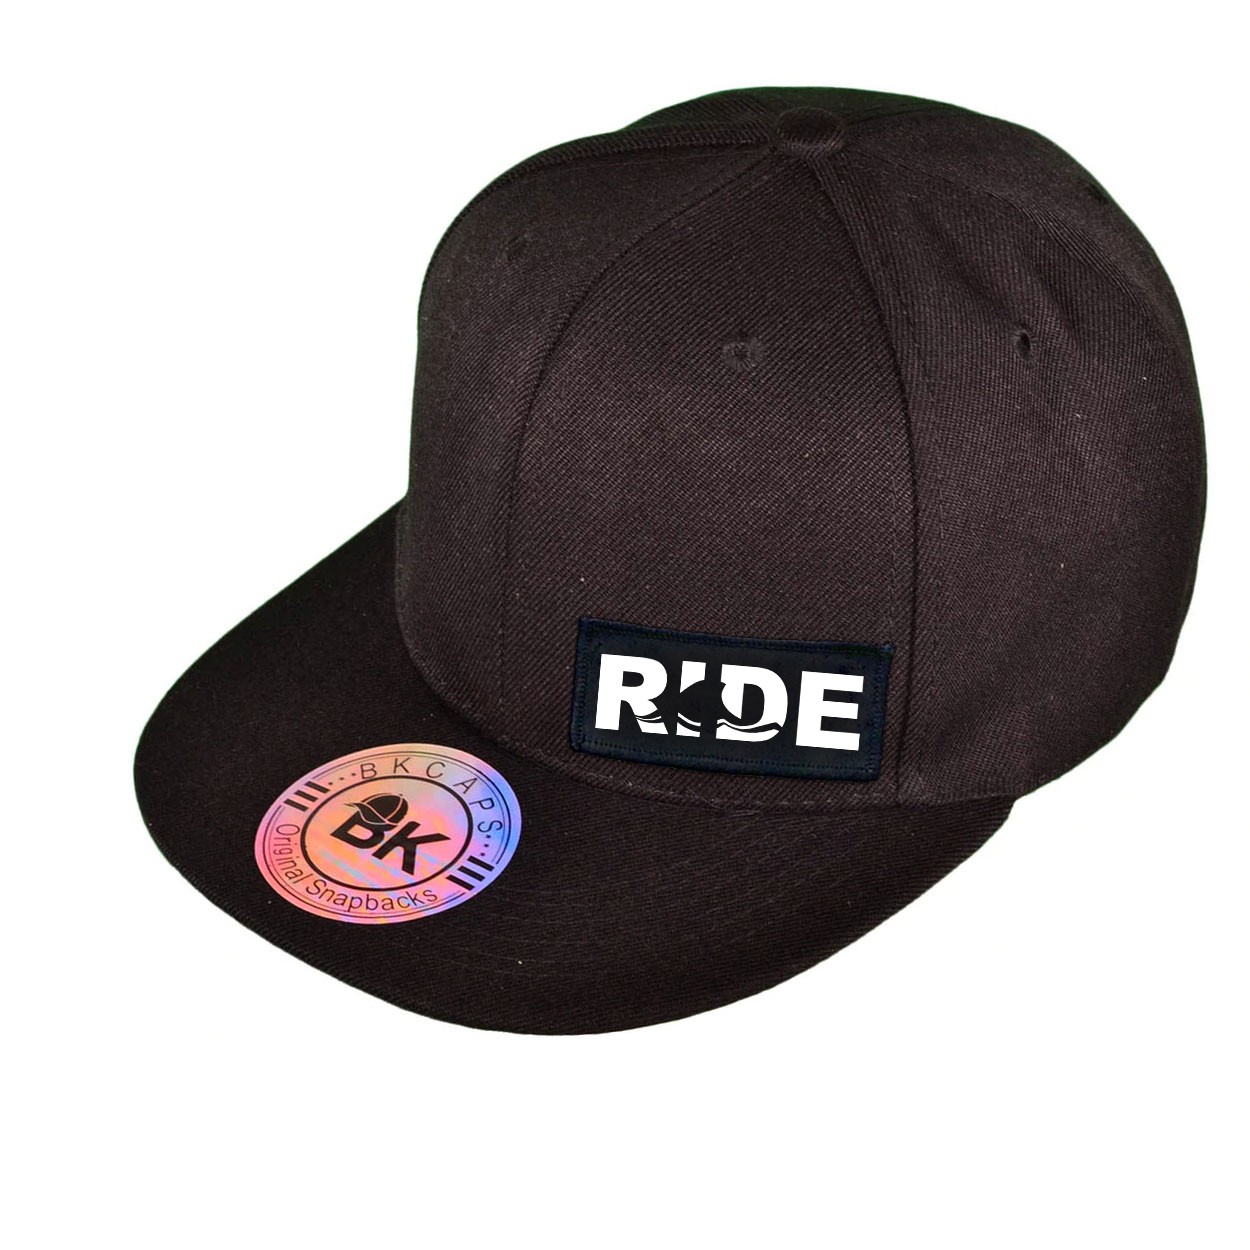 Ride Wave Logo Night Out Woven Patch Snapback Flat Brim Hat Black (White Logo)